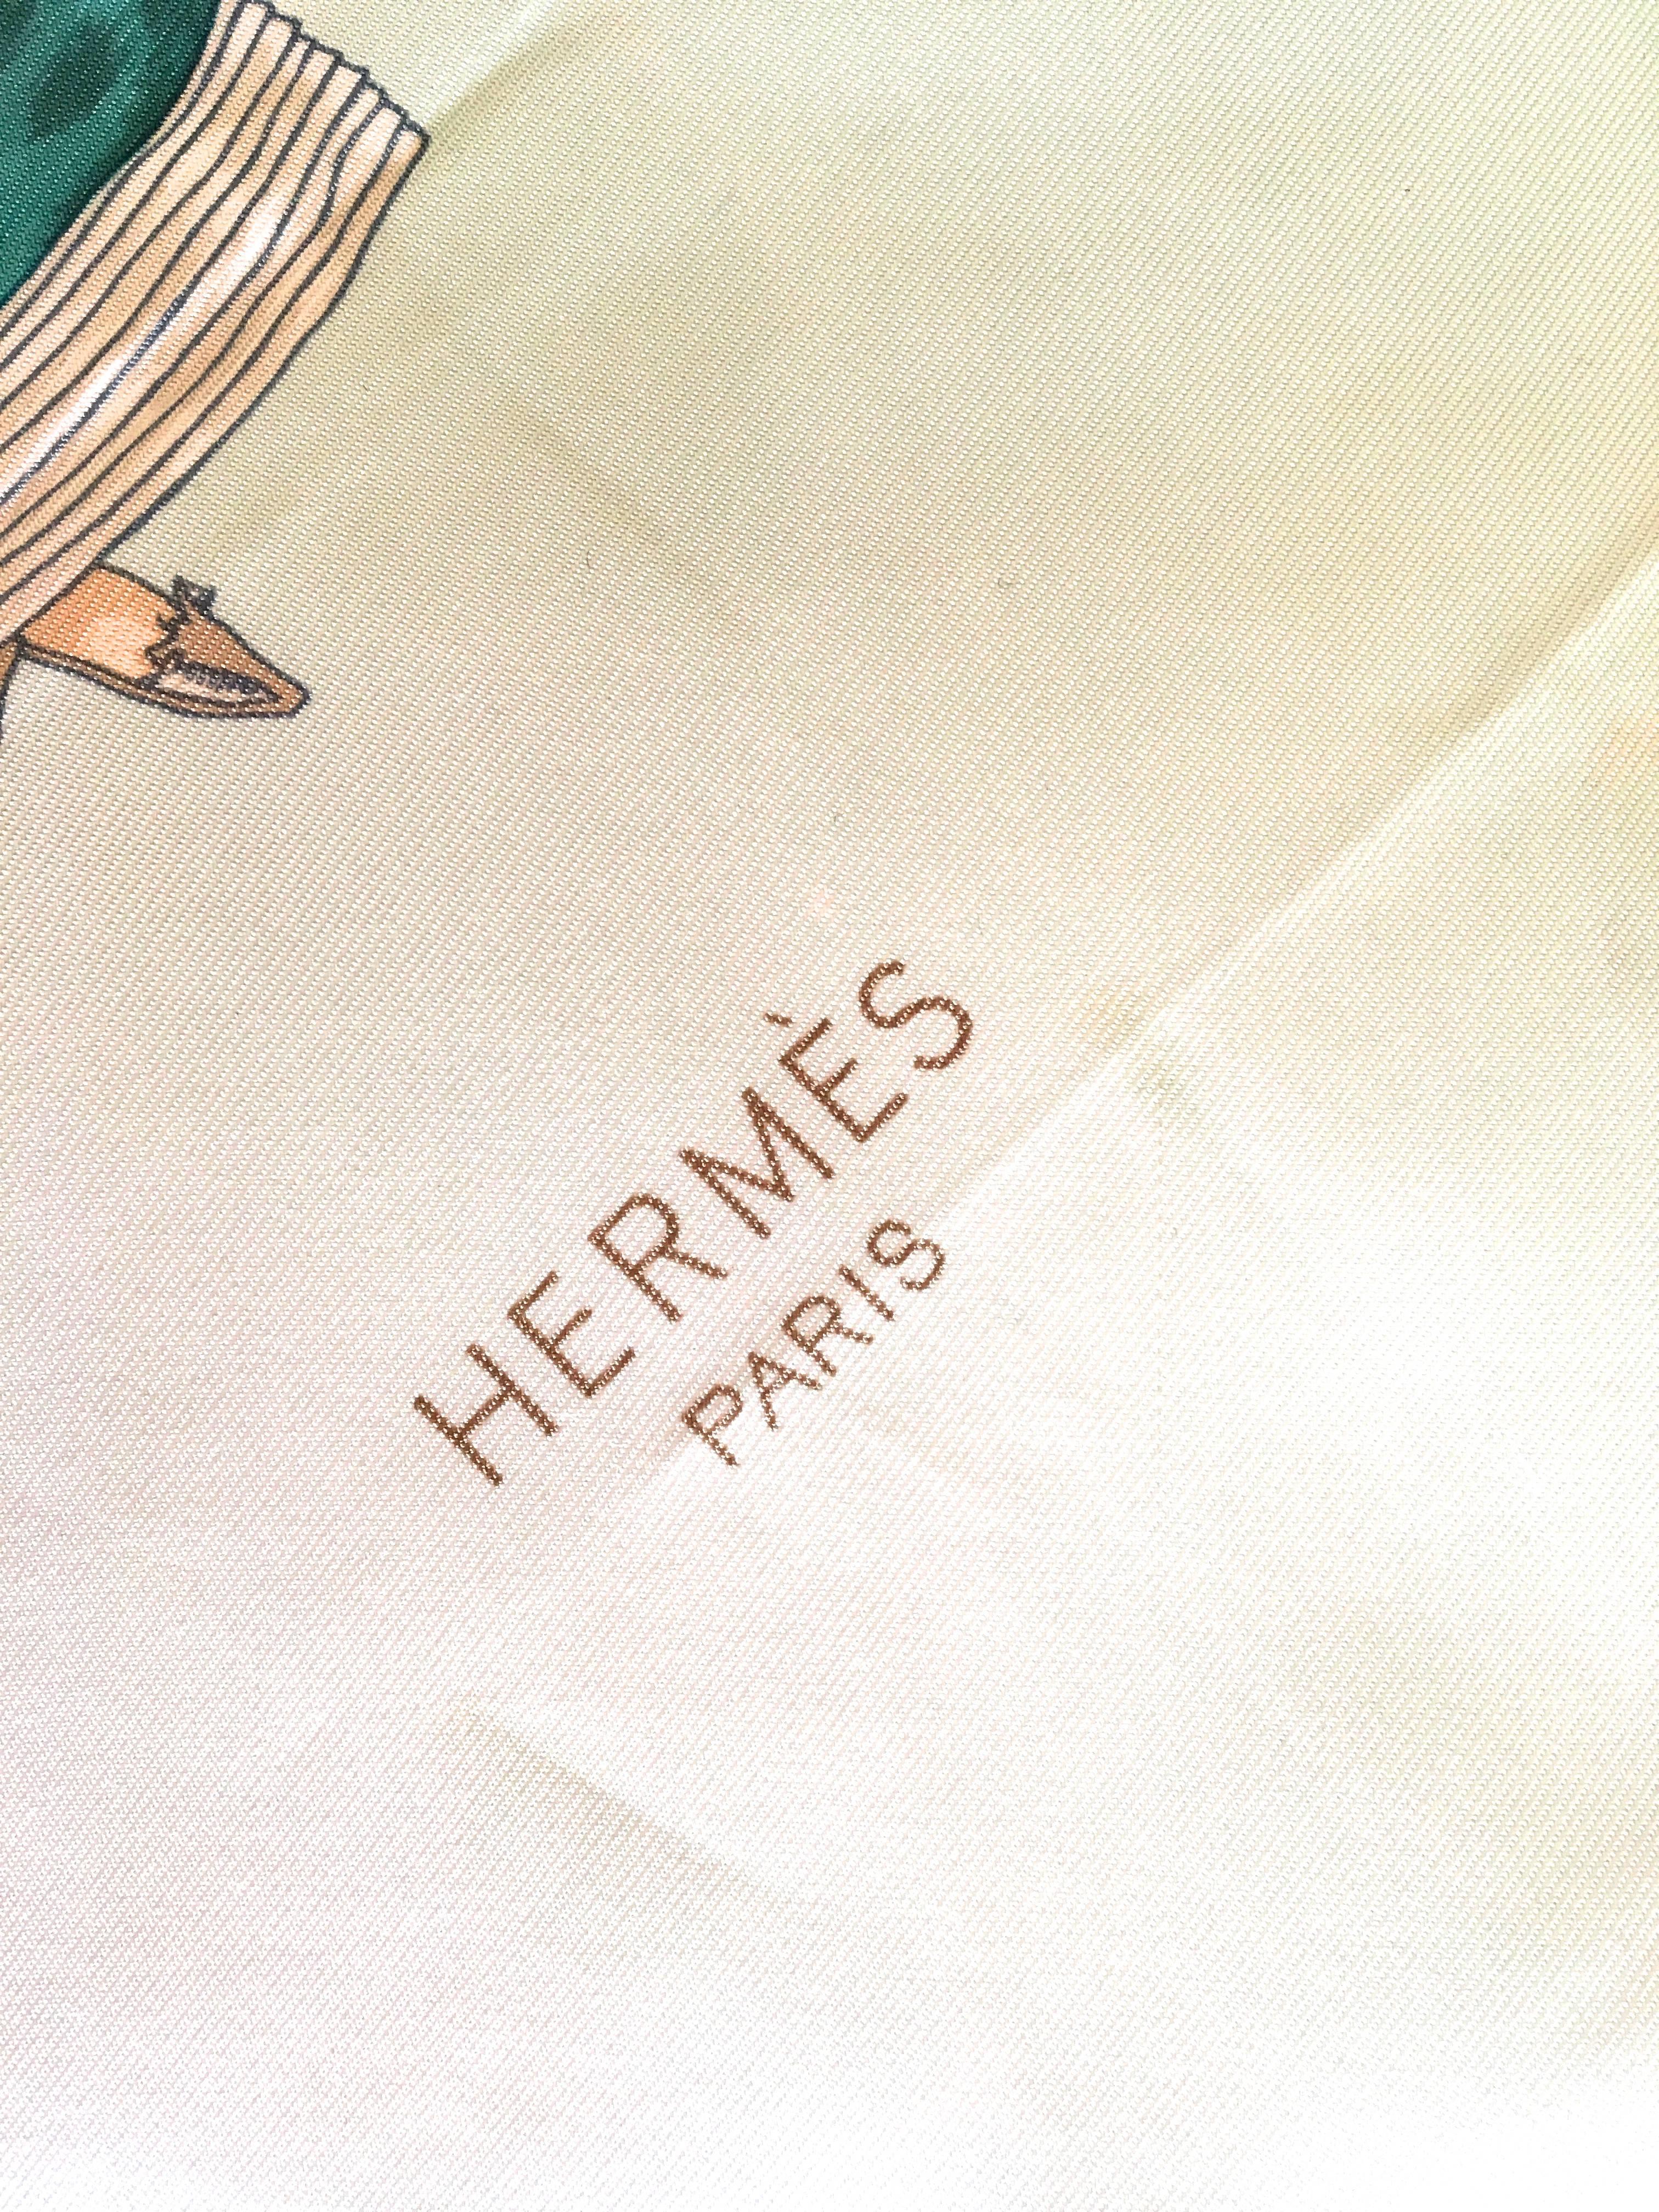 Rare Hermes Silk Scarf - Paris Modiste For Sale 2